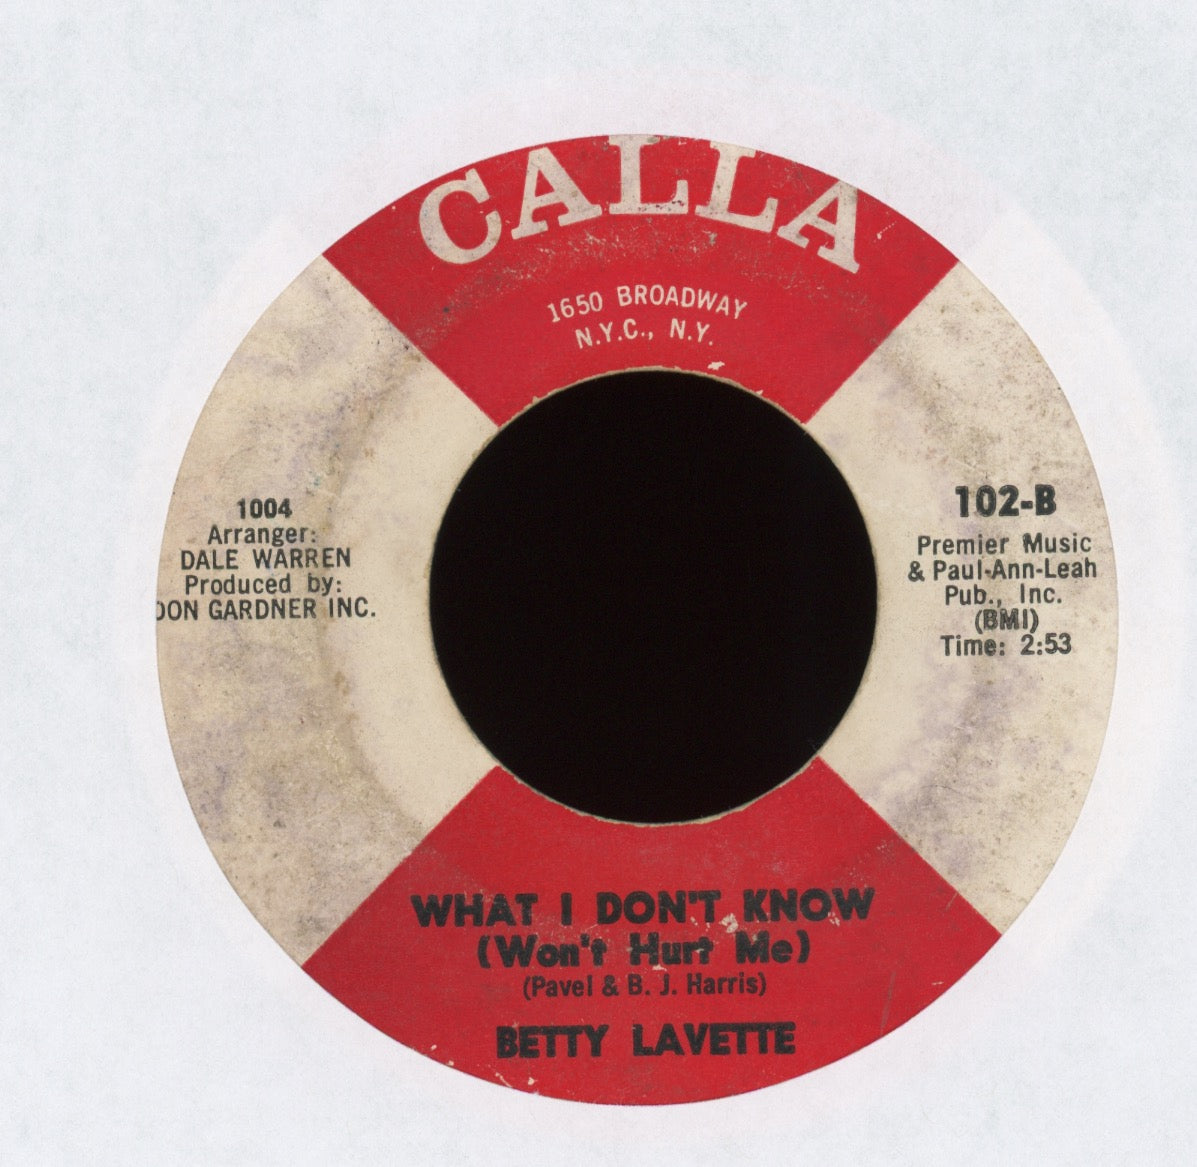 Bettye Lavette - Let Me Down Easy on Calla Northern Soul 45